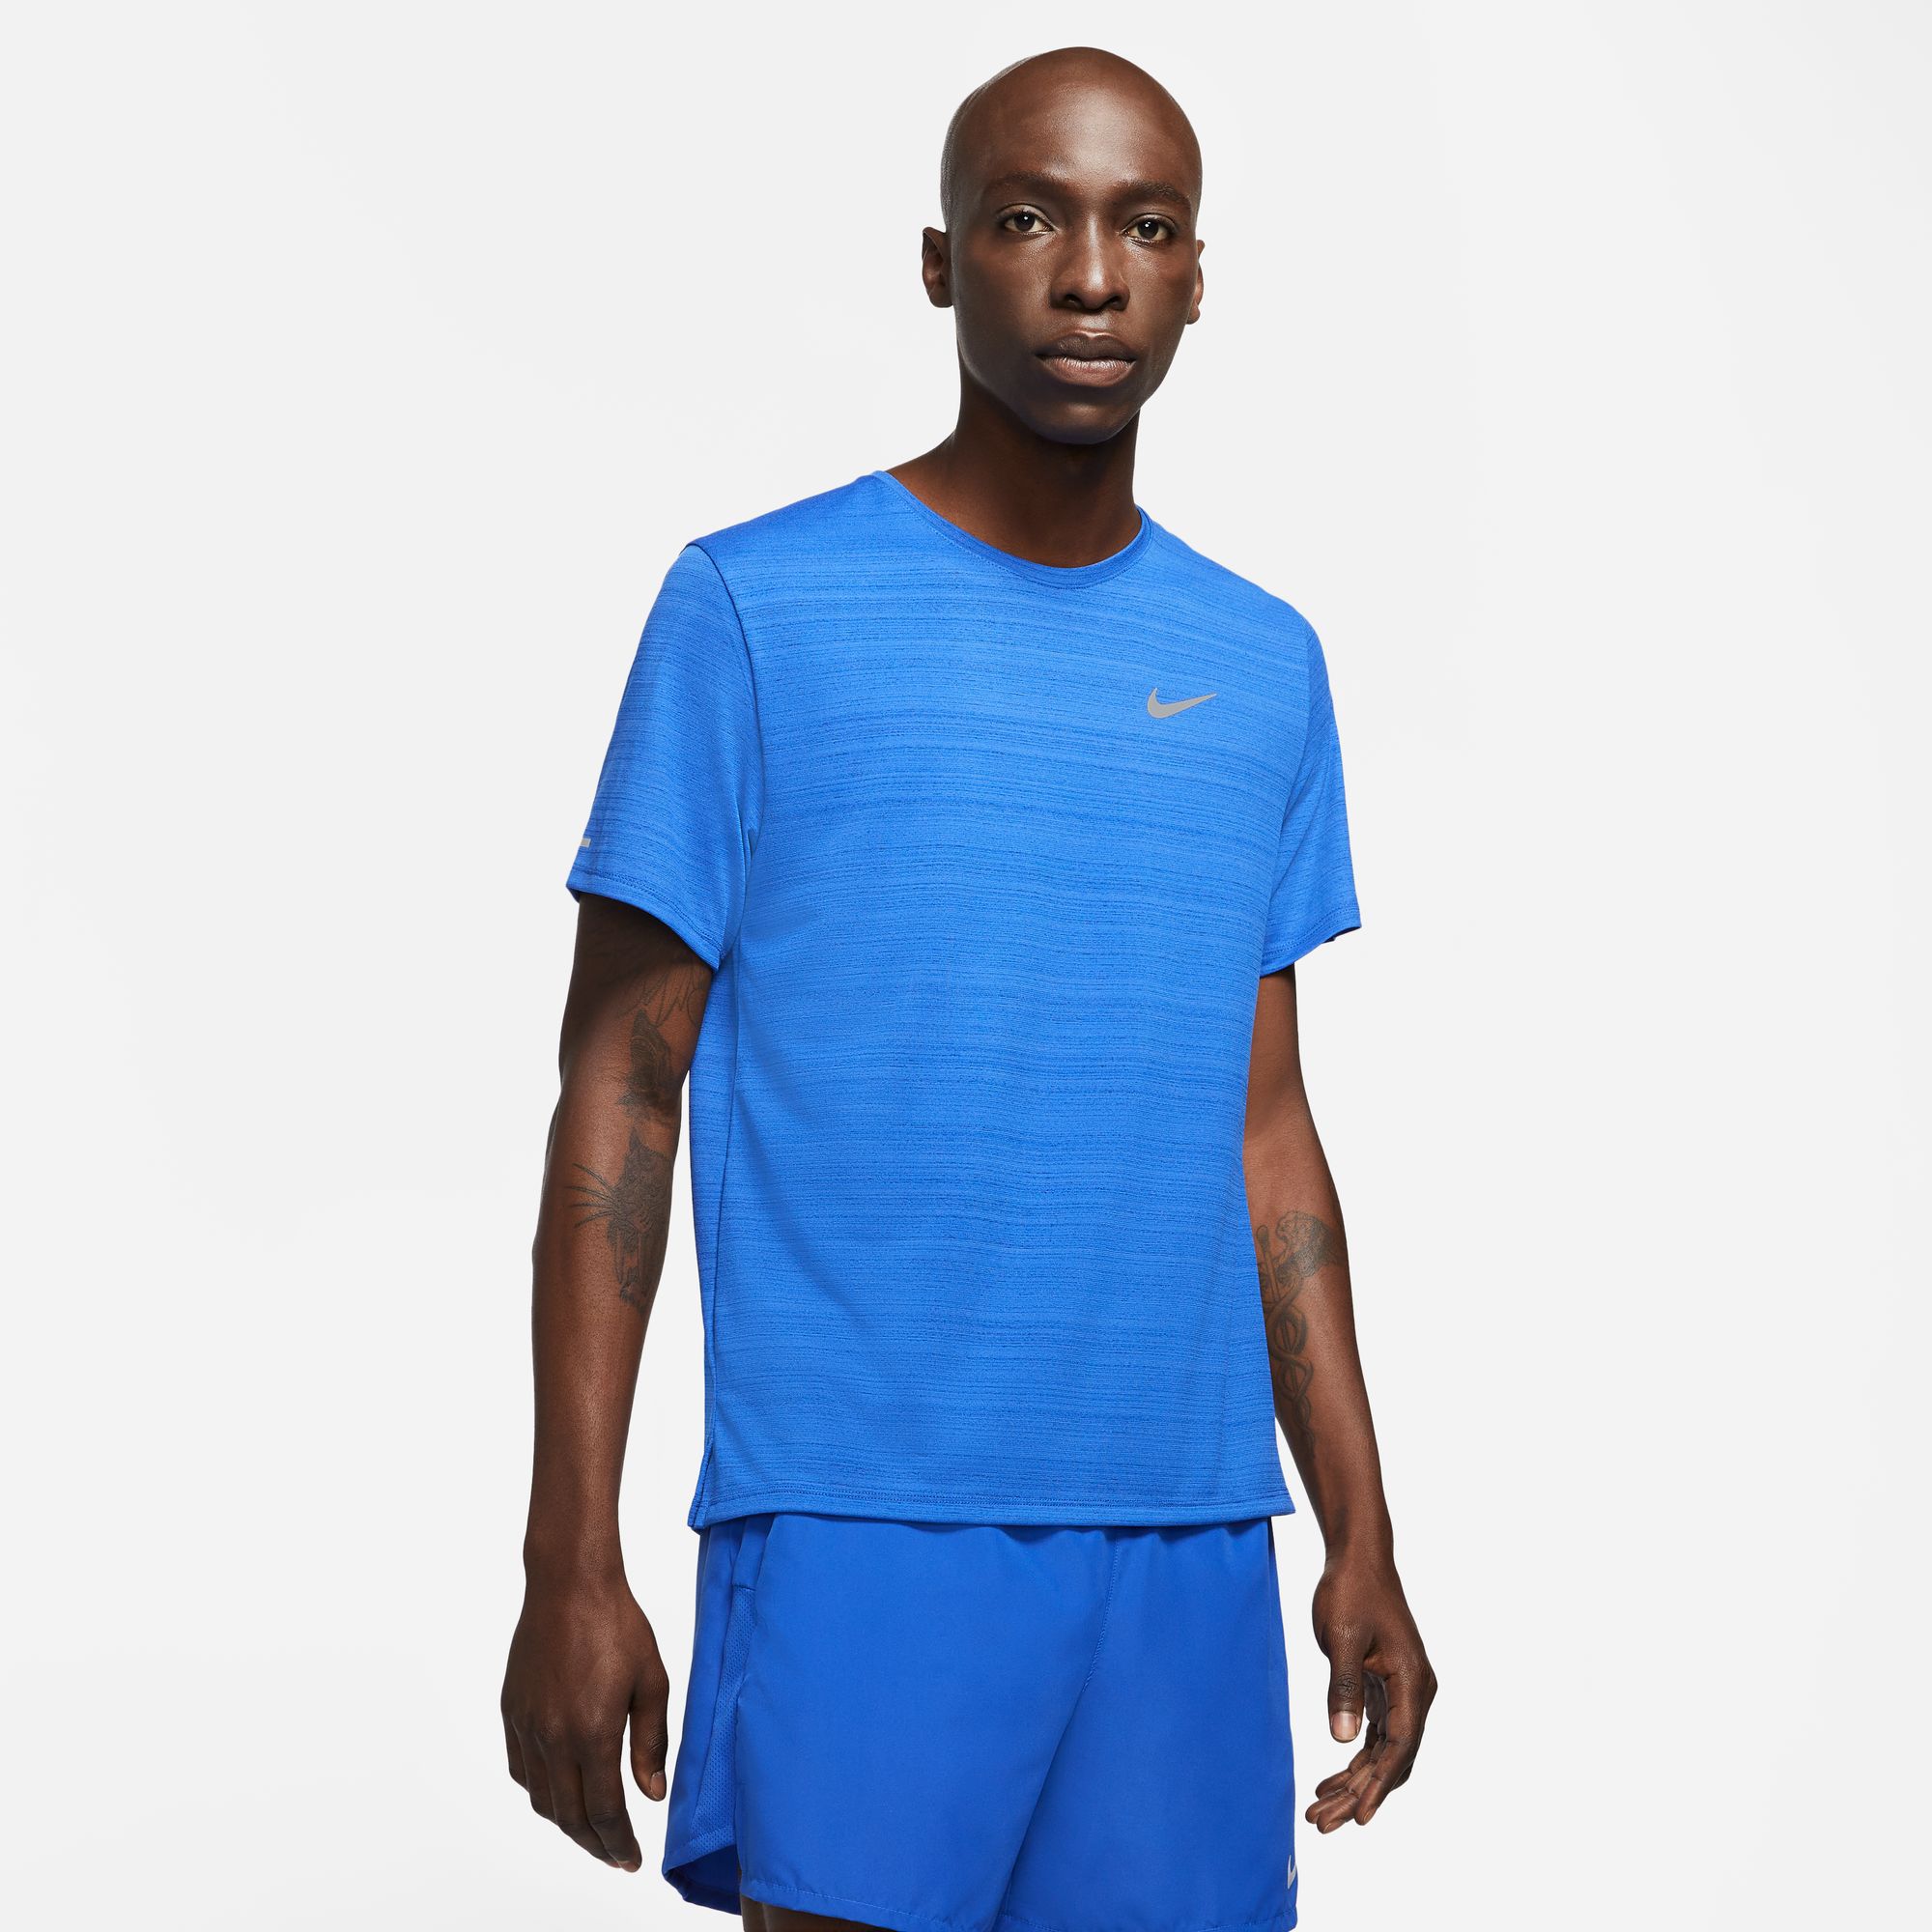 Nike Unisex Lightweight Running Sleeve